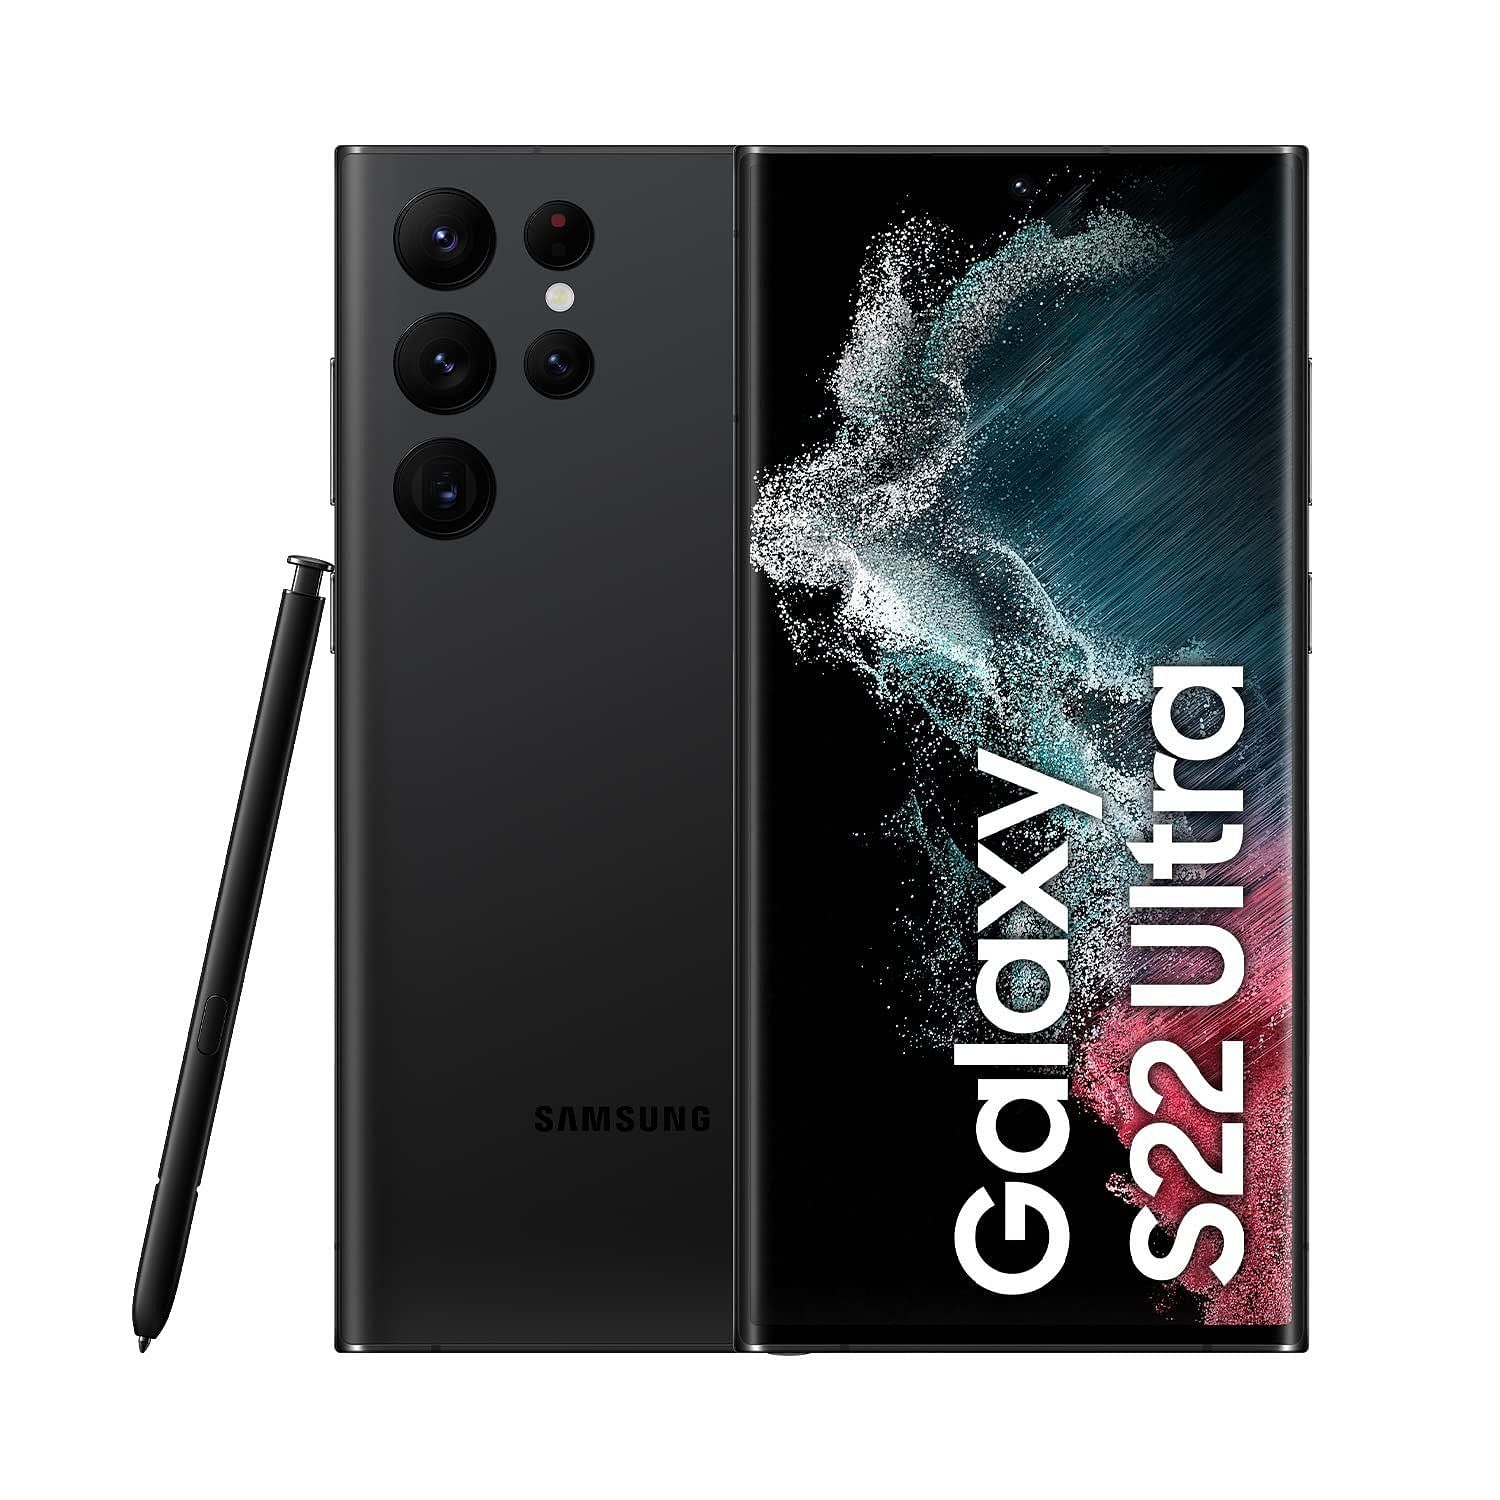 The Samsung Galaxy S22 Ultra 5G (Image via Amazon)